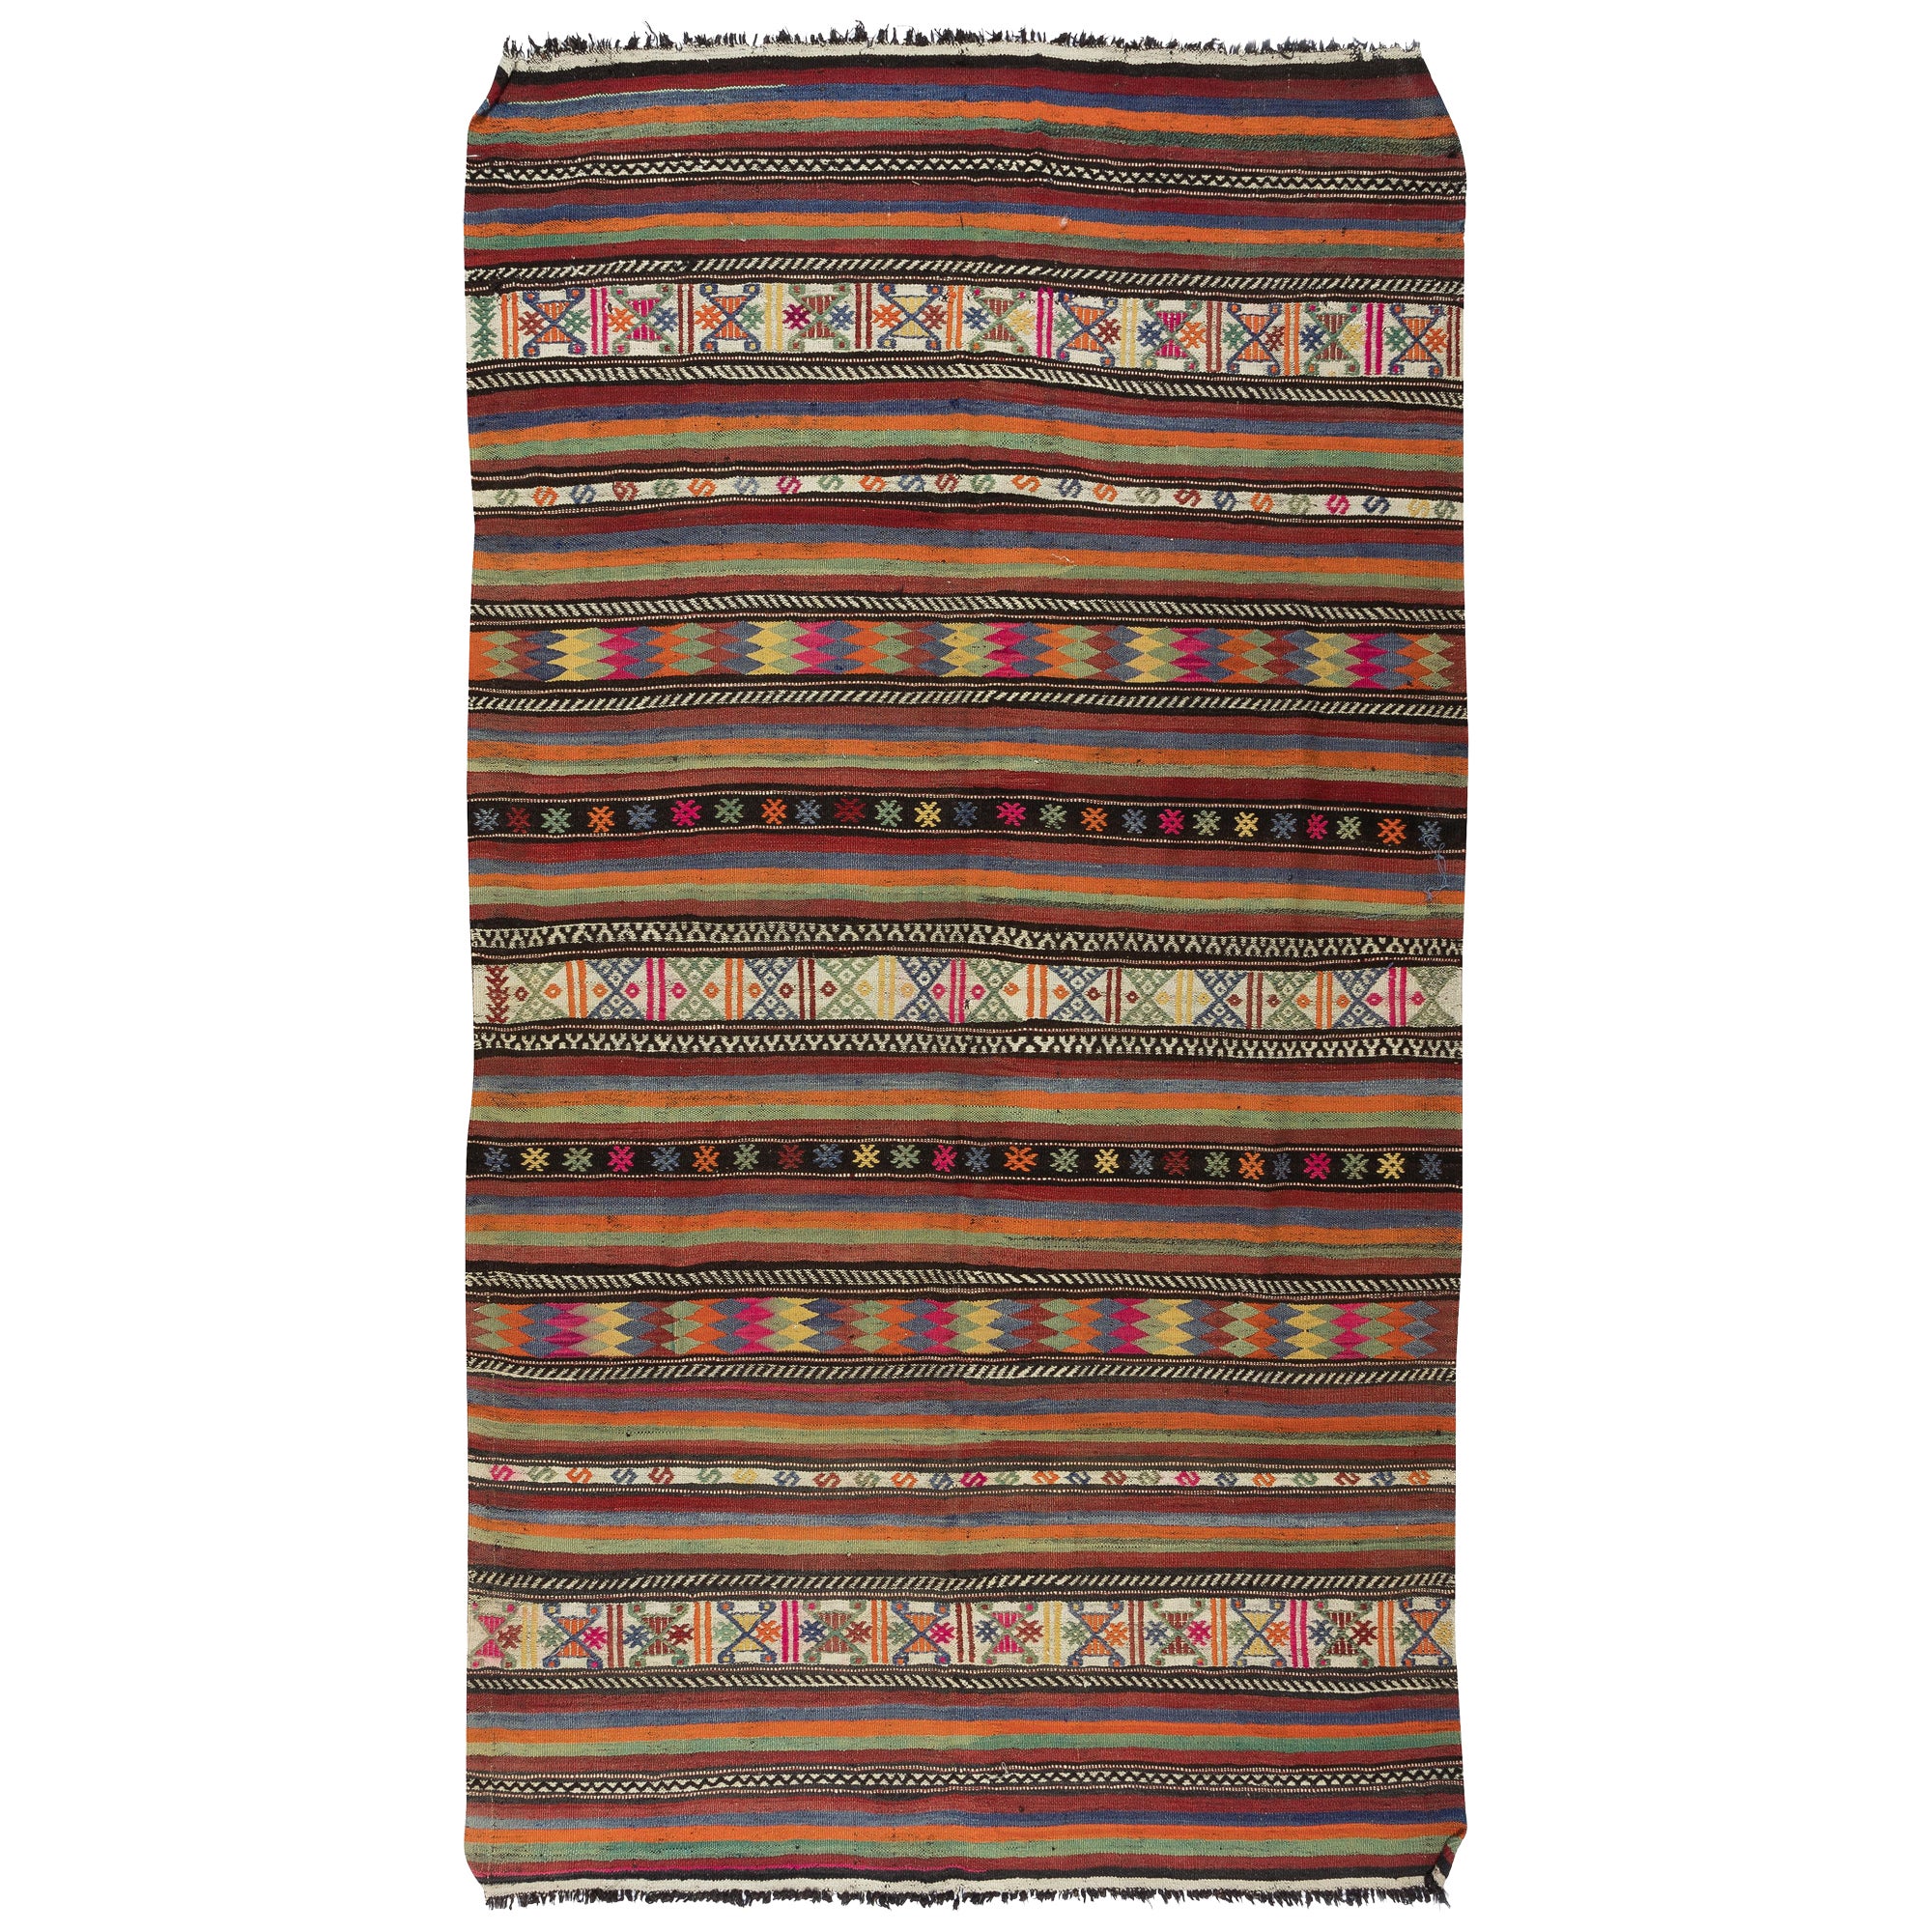 5.3x9.6 Ft Colorful Kilim Made of Hand-Spun Wool, Hand-Woven Turkish Striped Rug